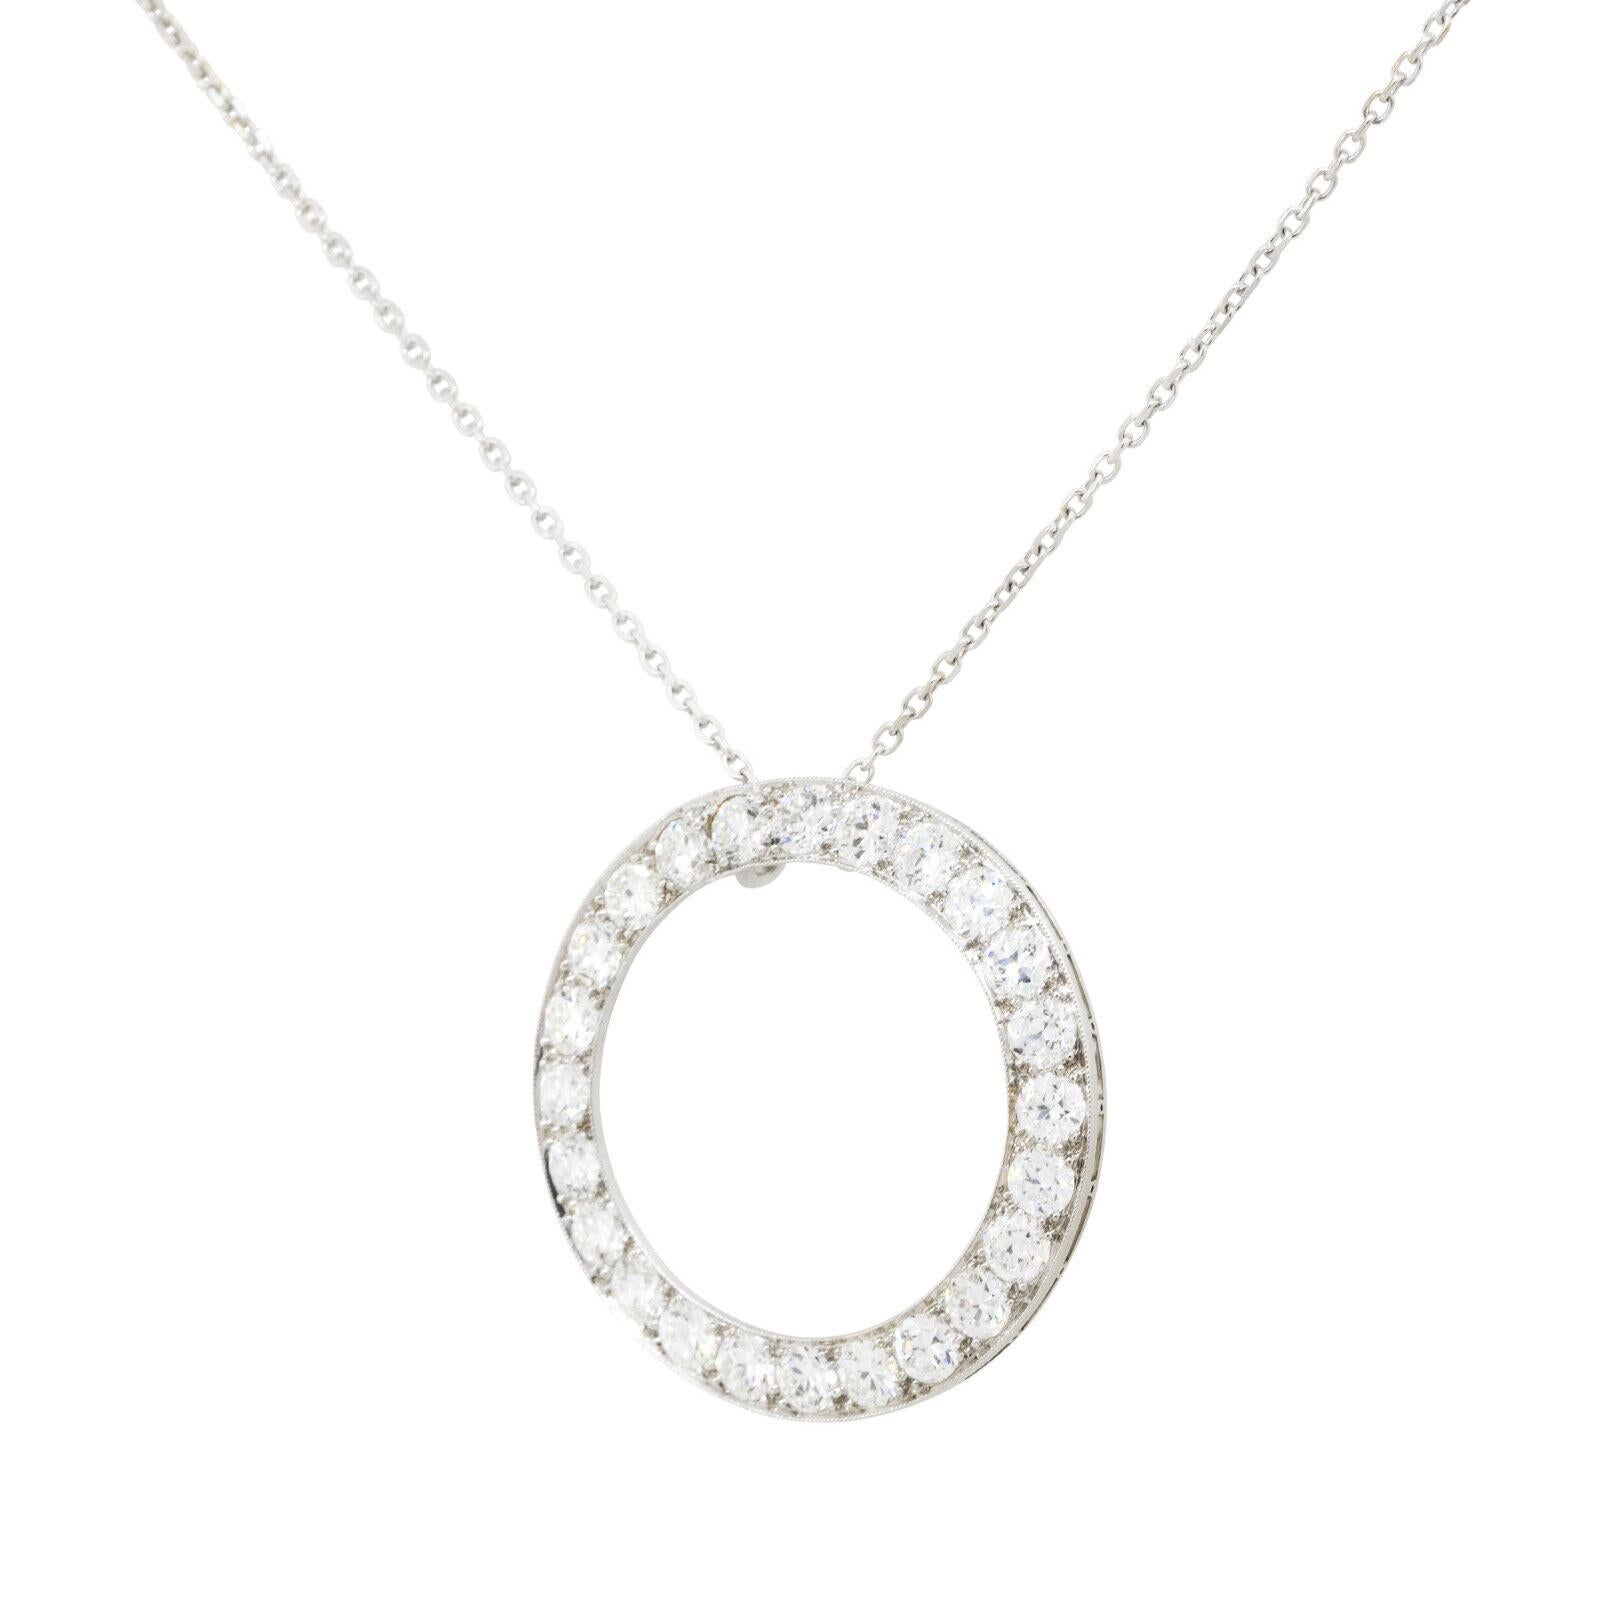 Taille ronde Pendentif en forme de cercle en diamant de 2,4 carats sur chaîne 14 carats, en stock en vente